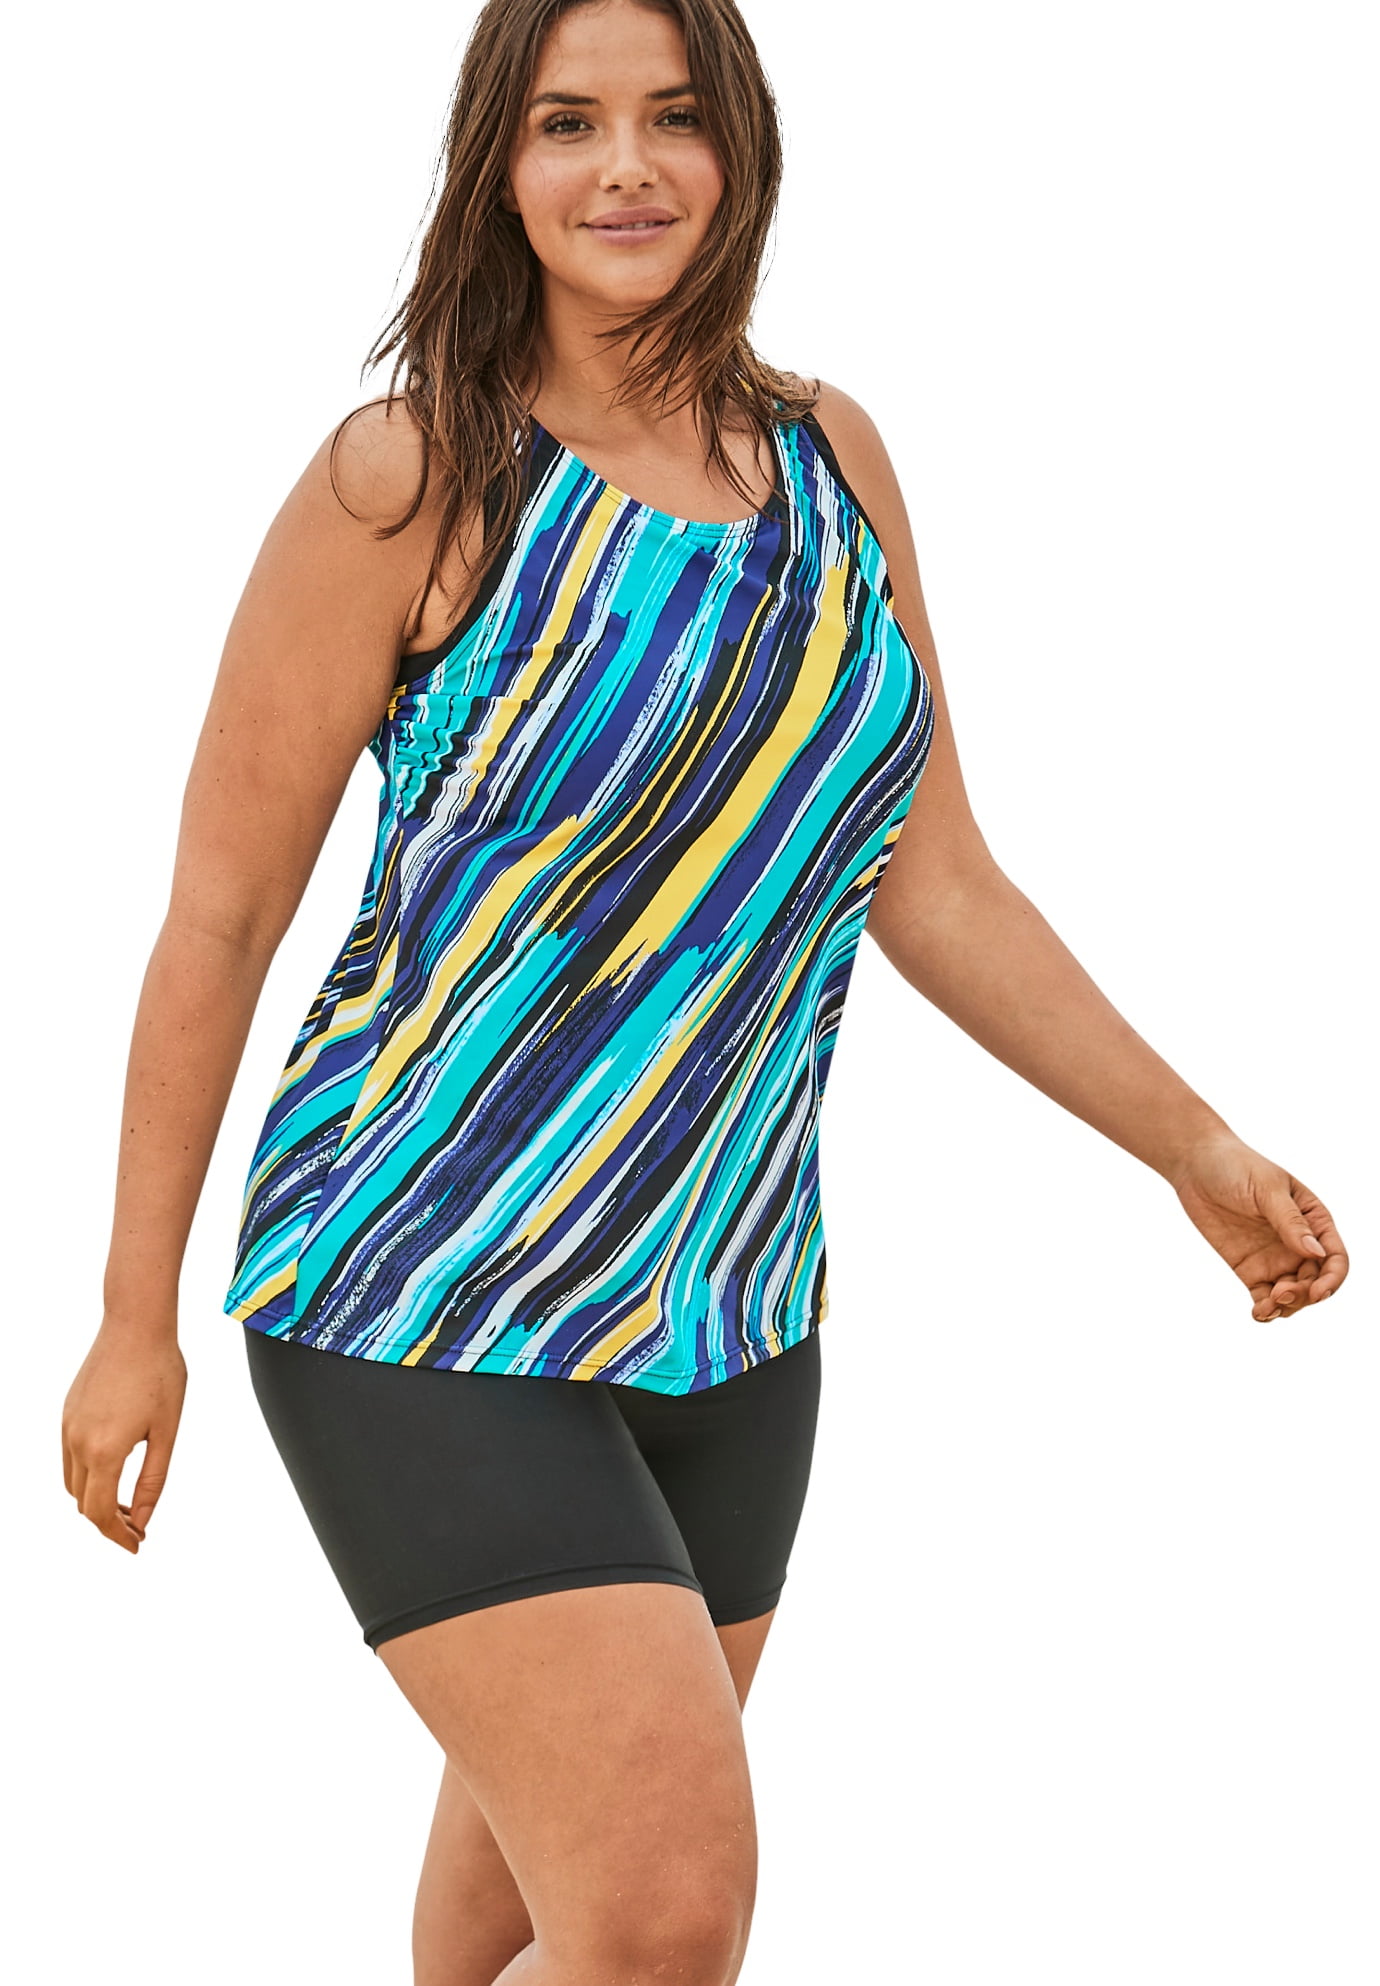 For All Women's Size Longer-Length Racerback Tankini Top 24 Turq Painterly Stripe - Walmart.com